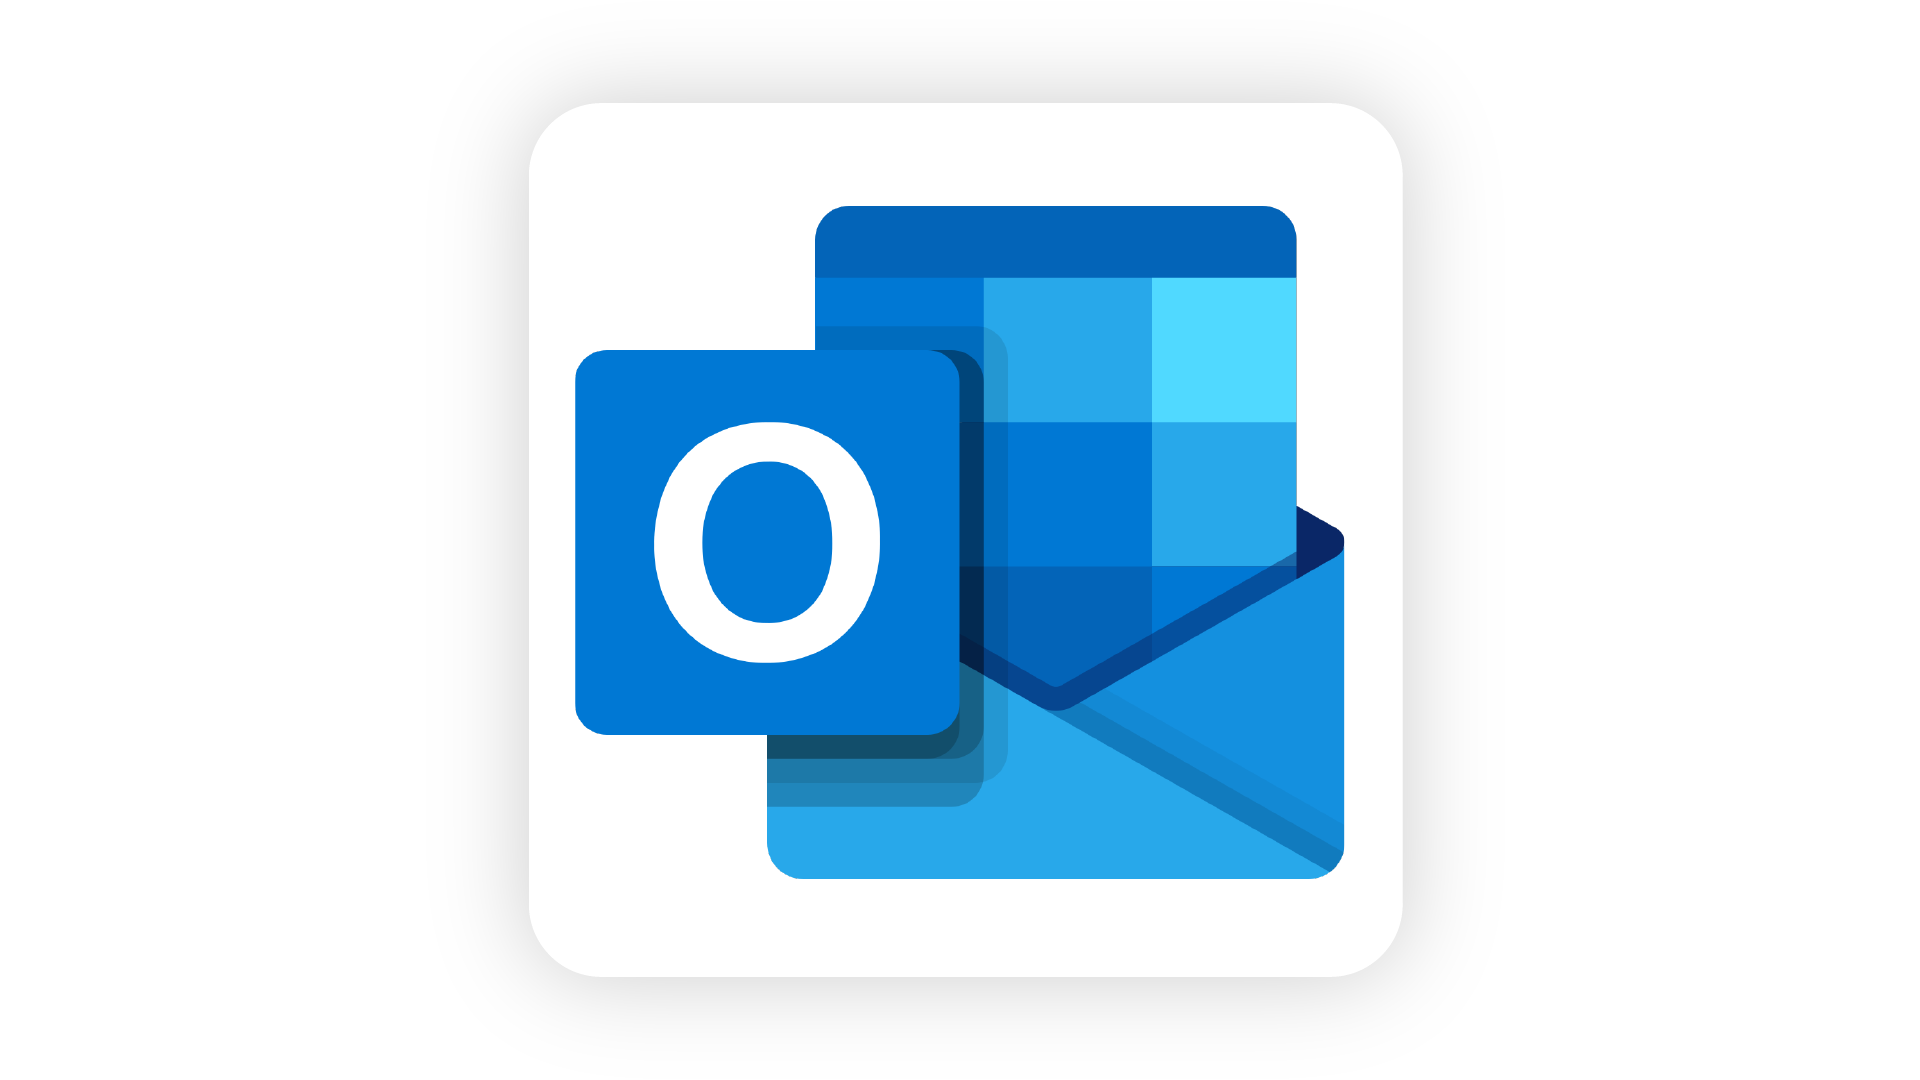 Outlook Logo / Microsoft Outlook Keyboard Commands | Perkins eLearning